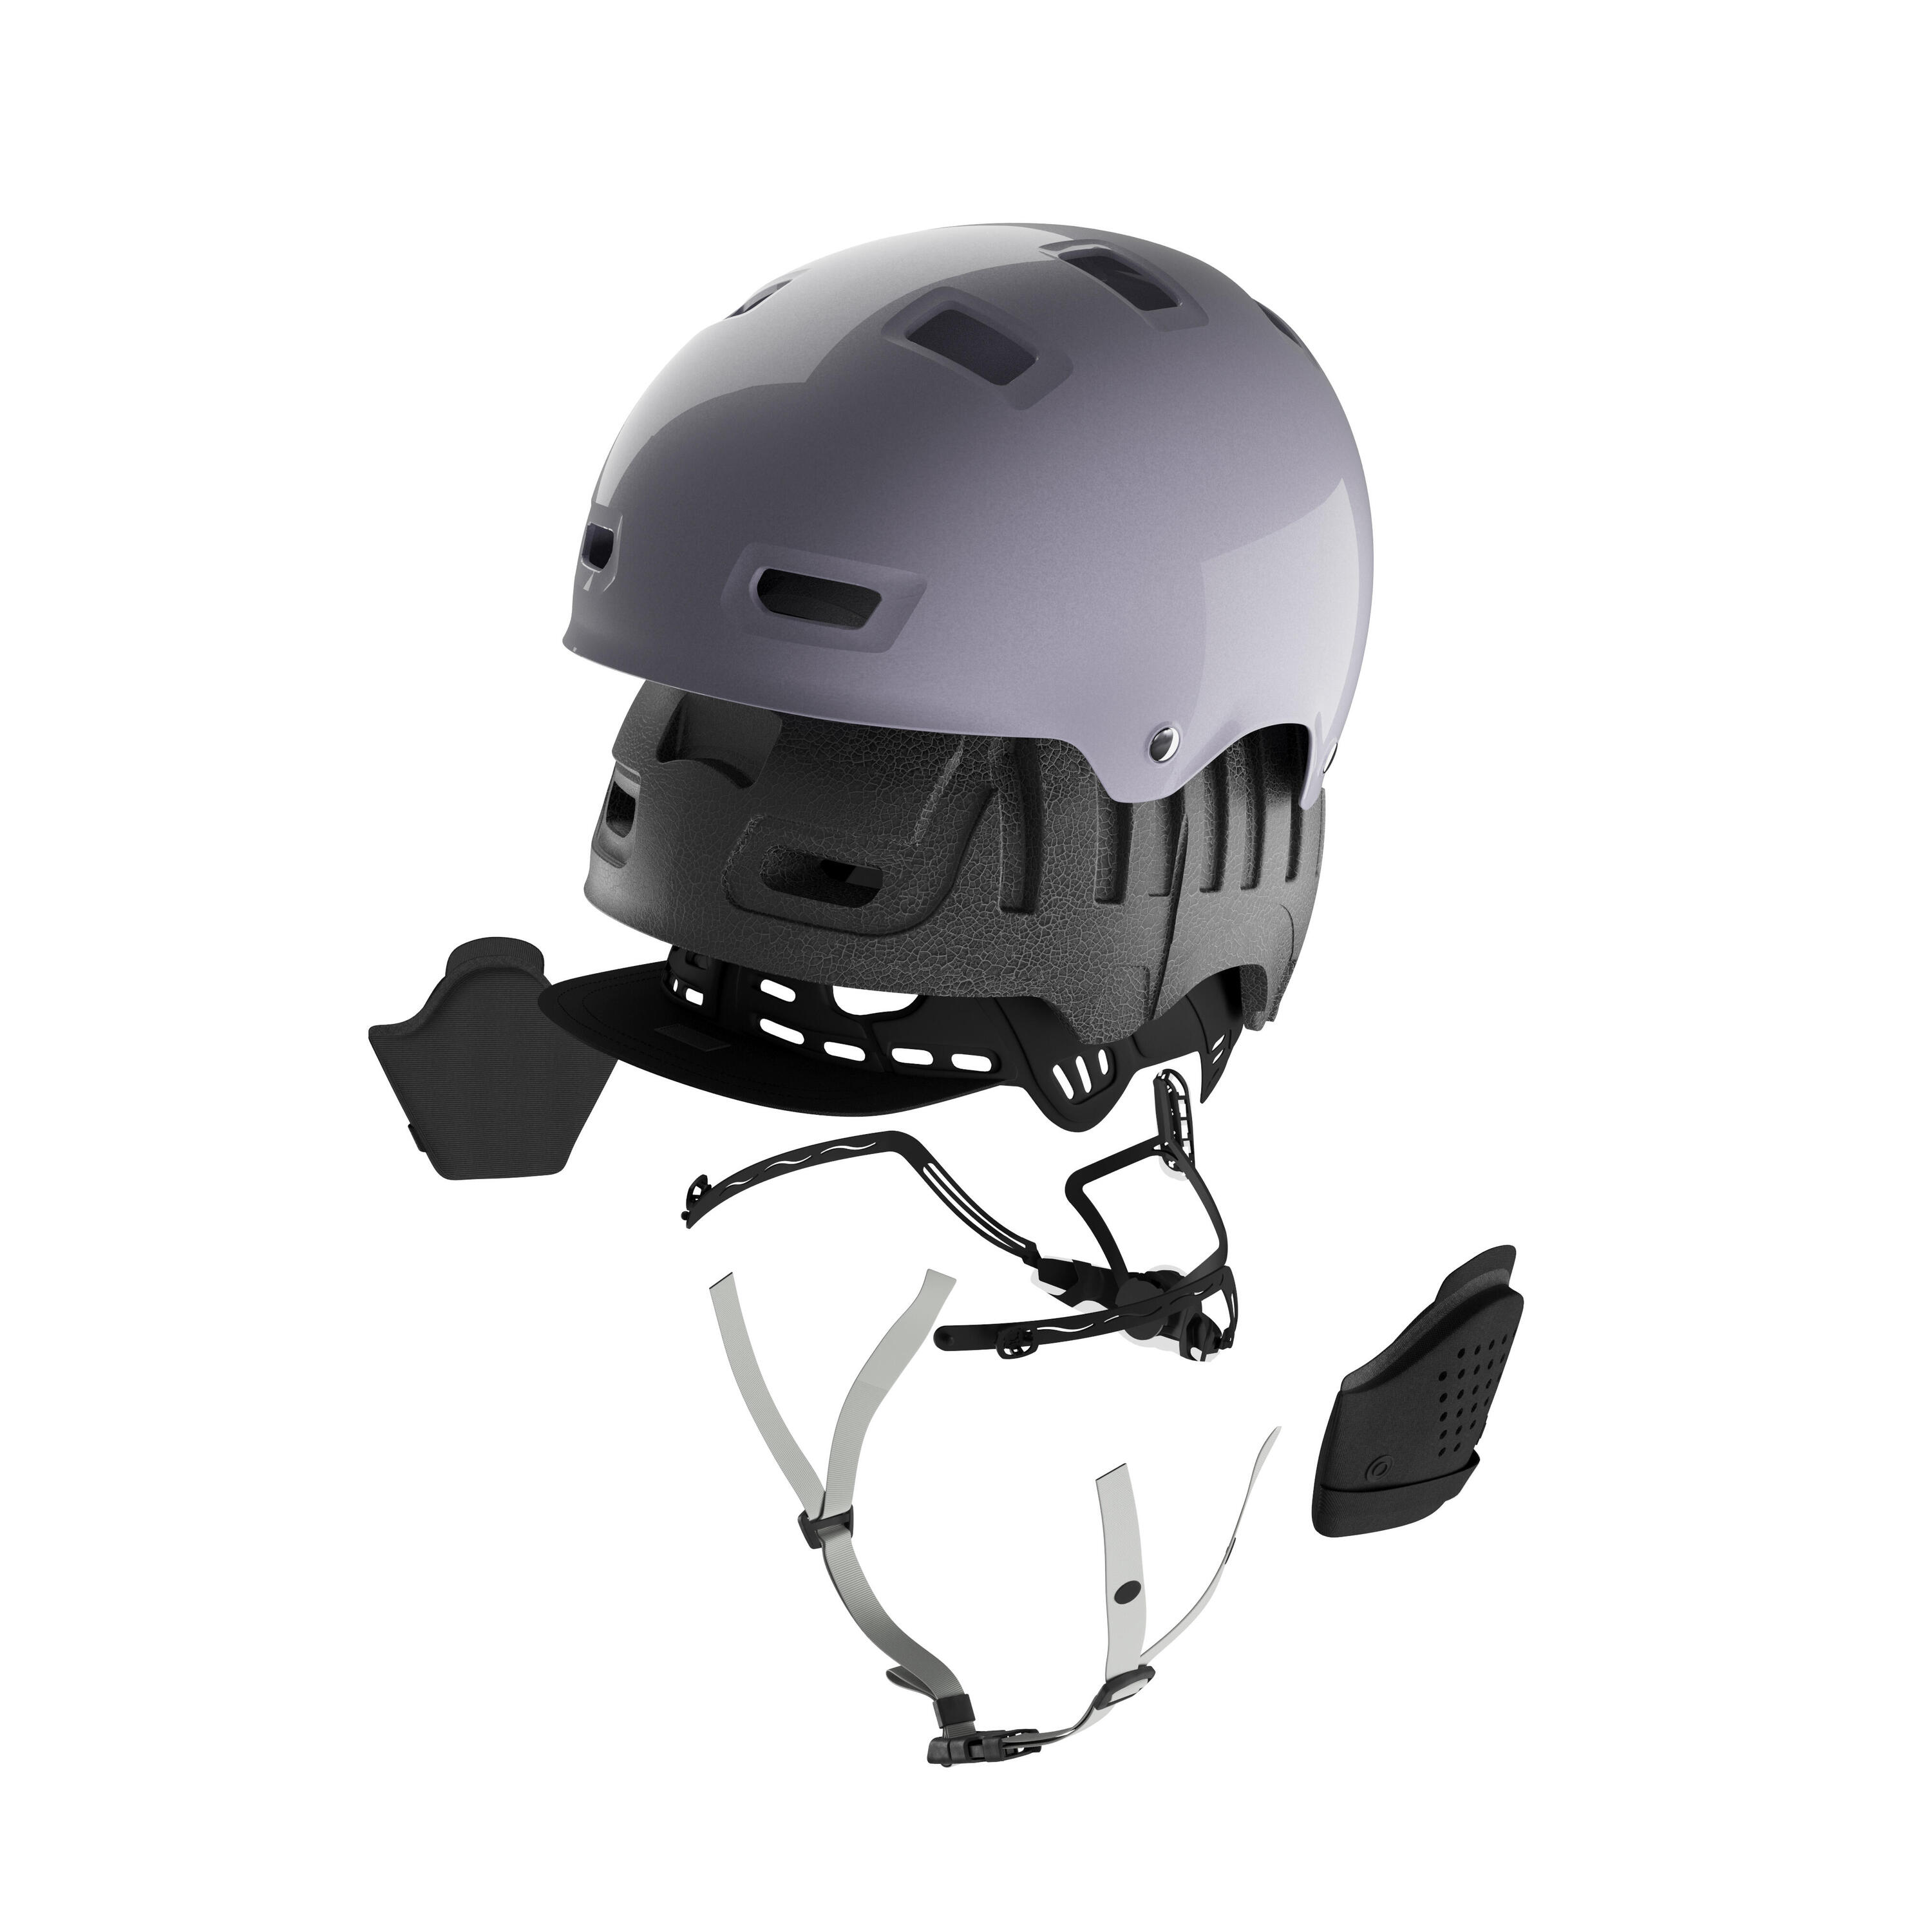 City Cycling Bowl Helmet 500 8/8